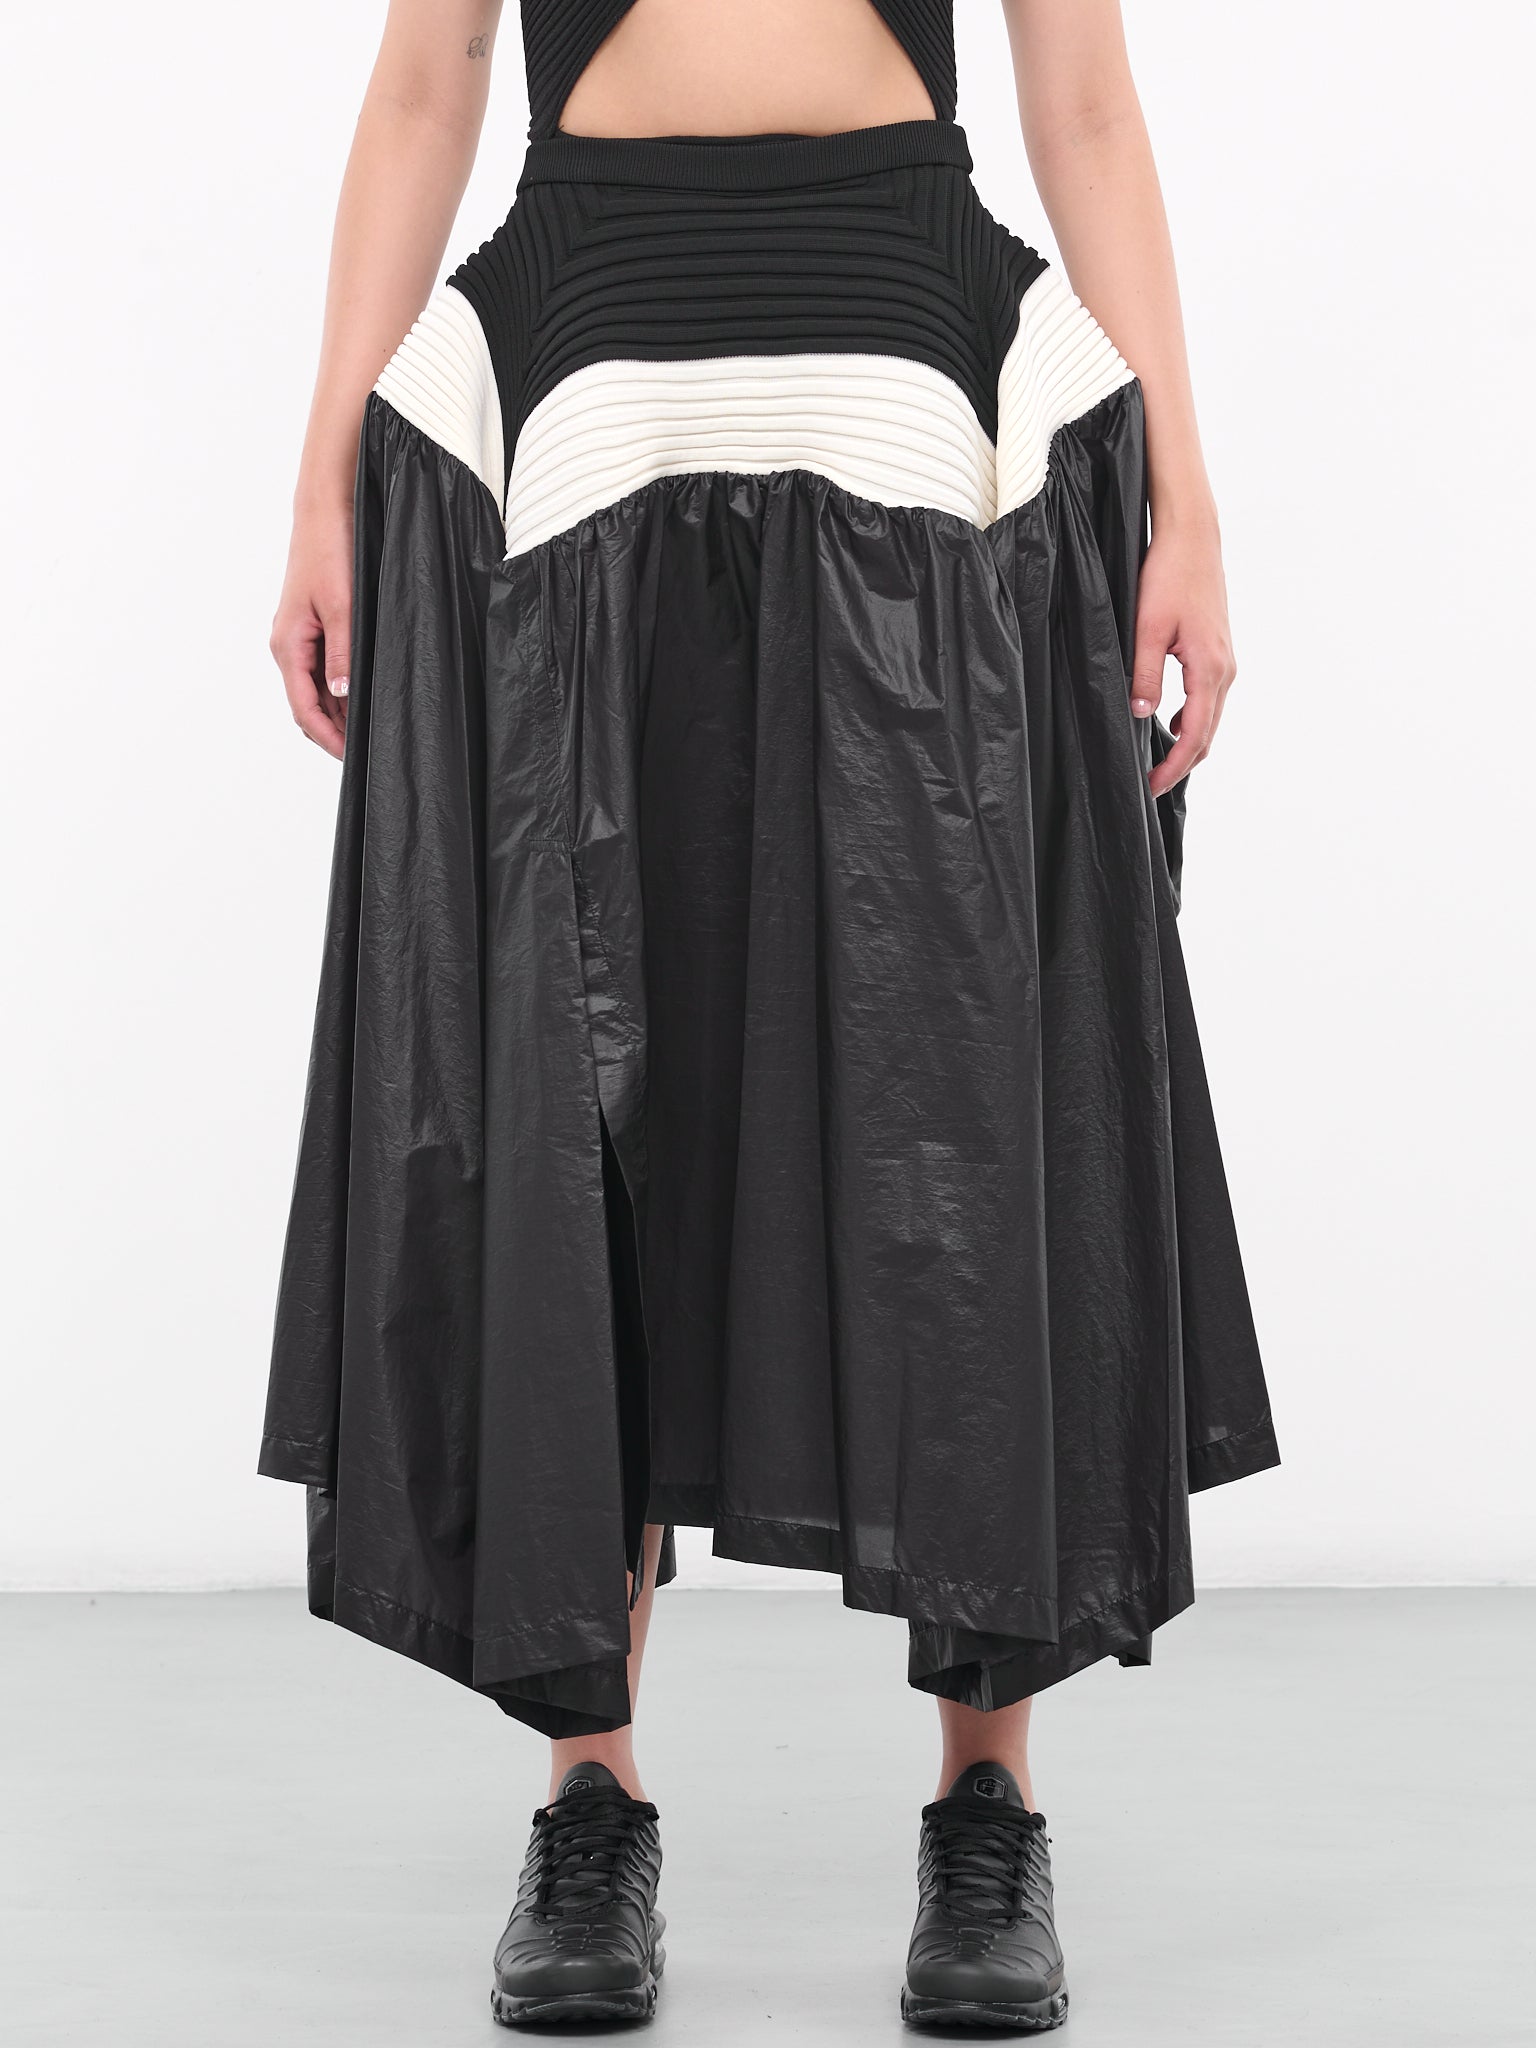 Square Scheme Skirt (IM38FG028-15-BLACK)